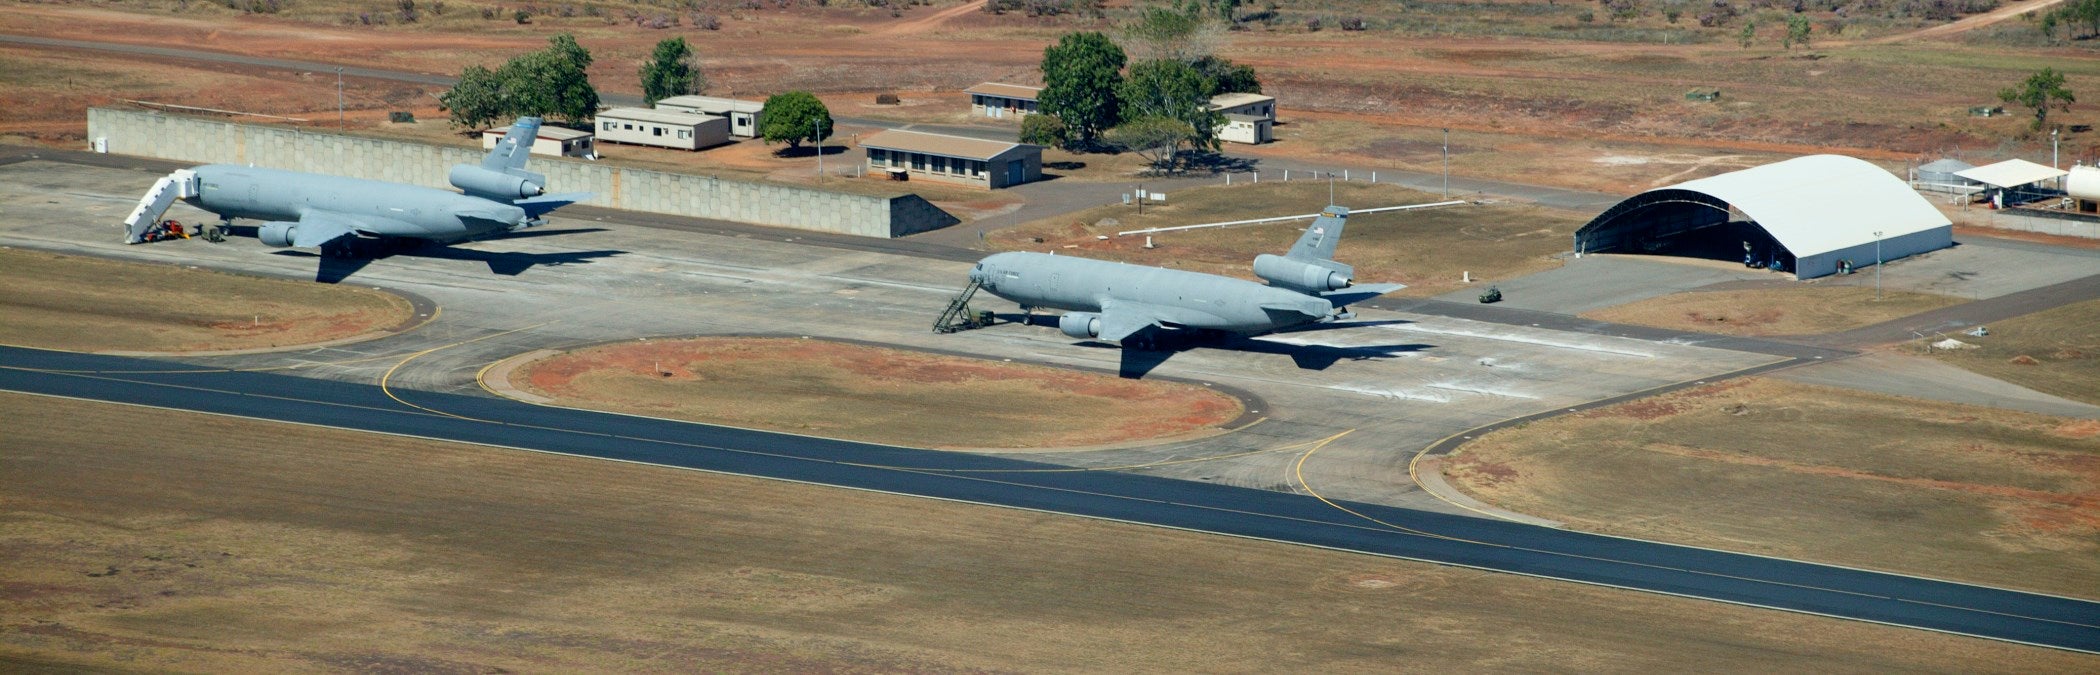 RAAF Base Darwin | HDR